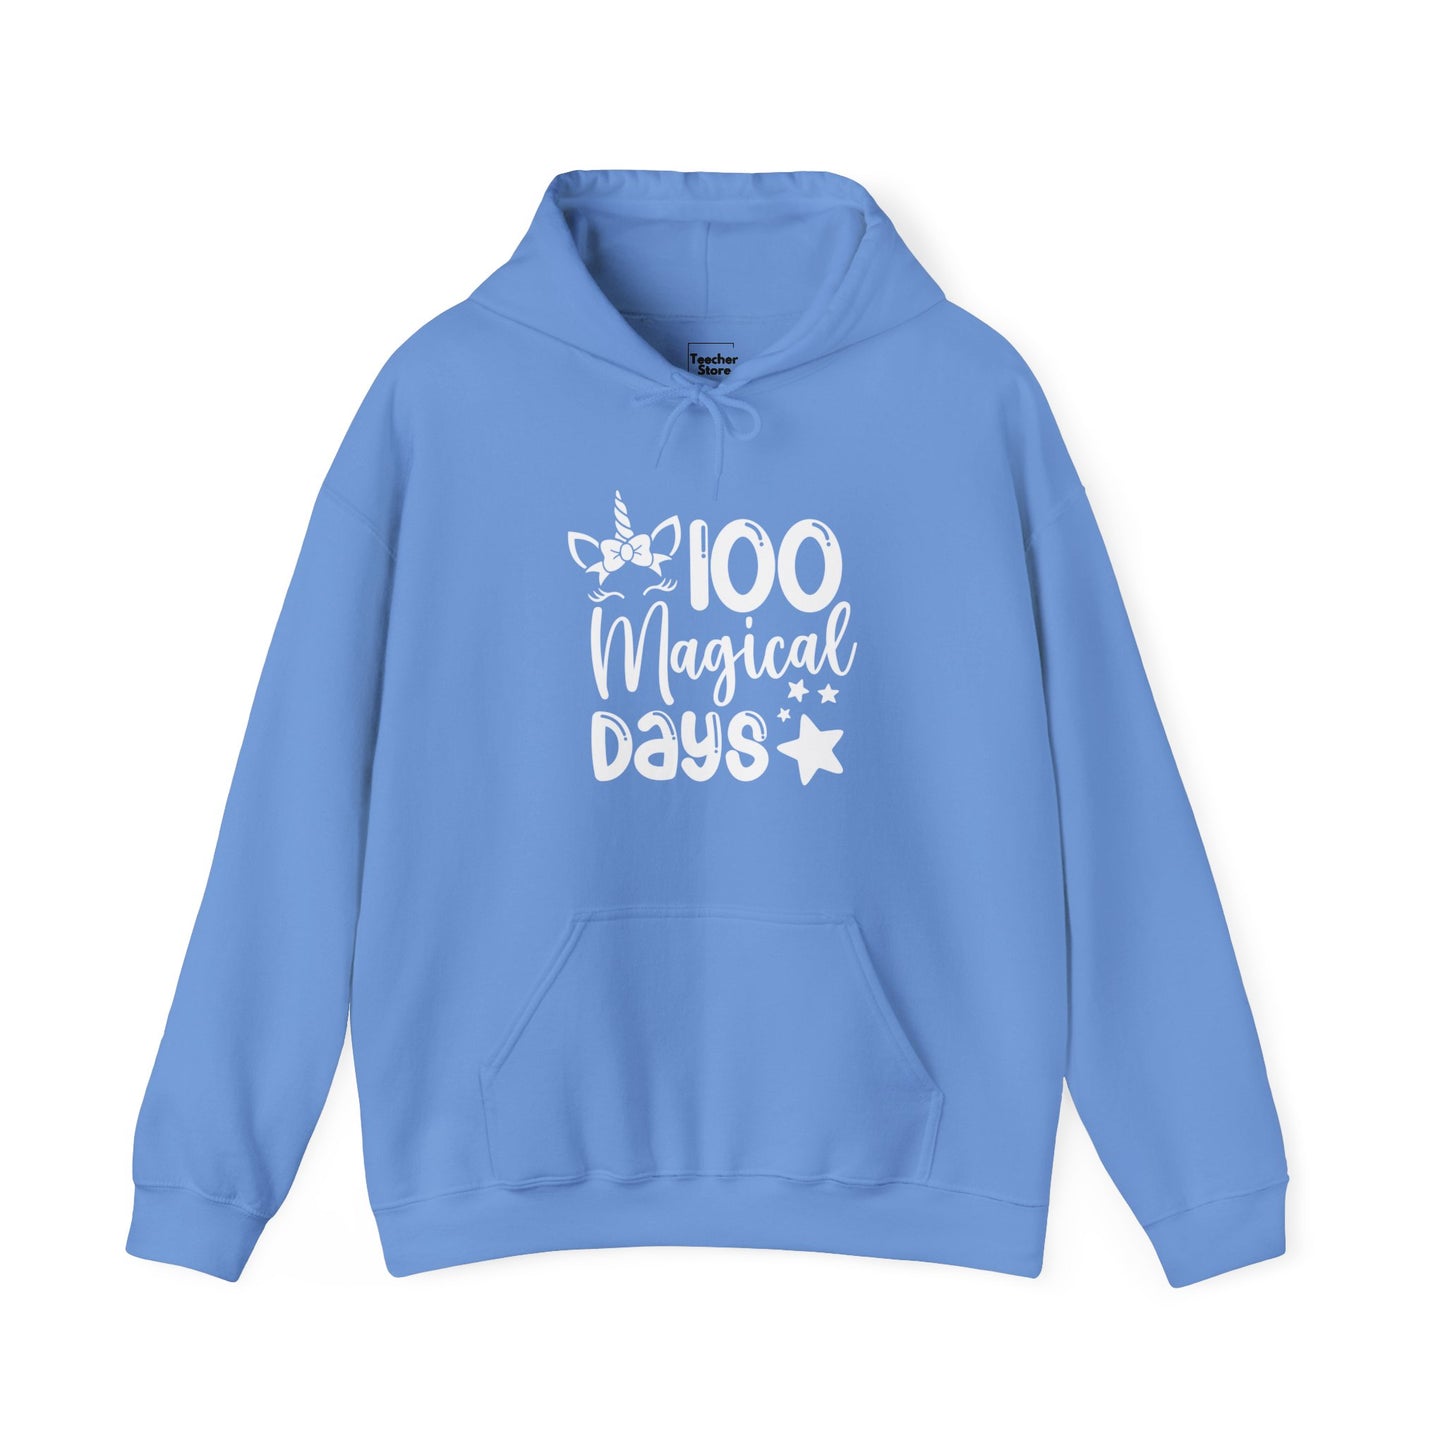 100 Magical Days Hooded Sweatshirt